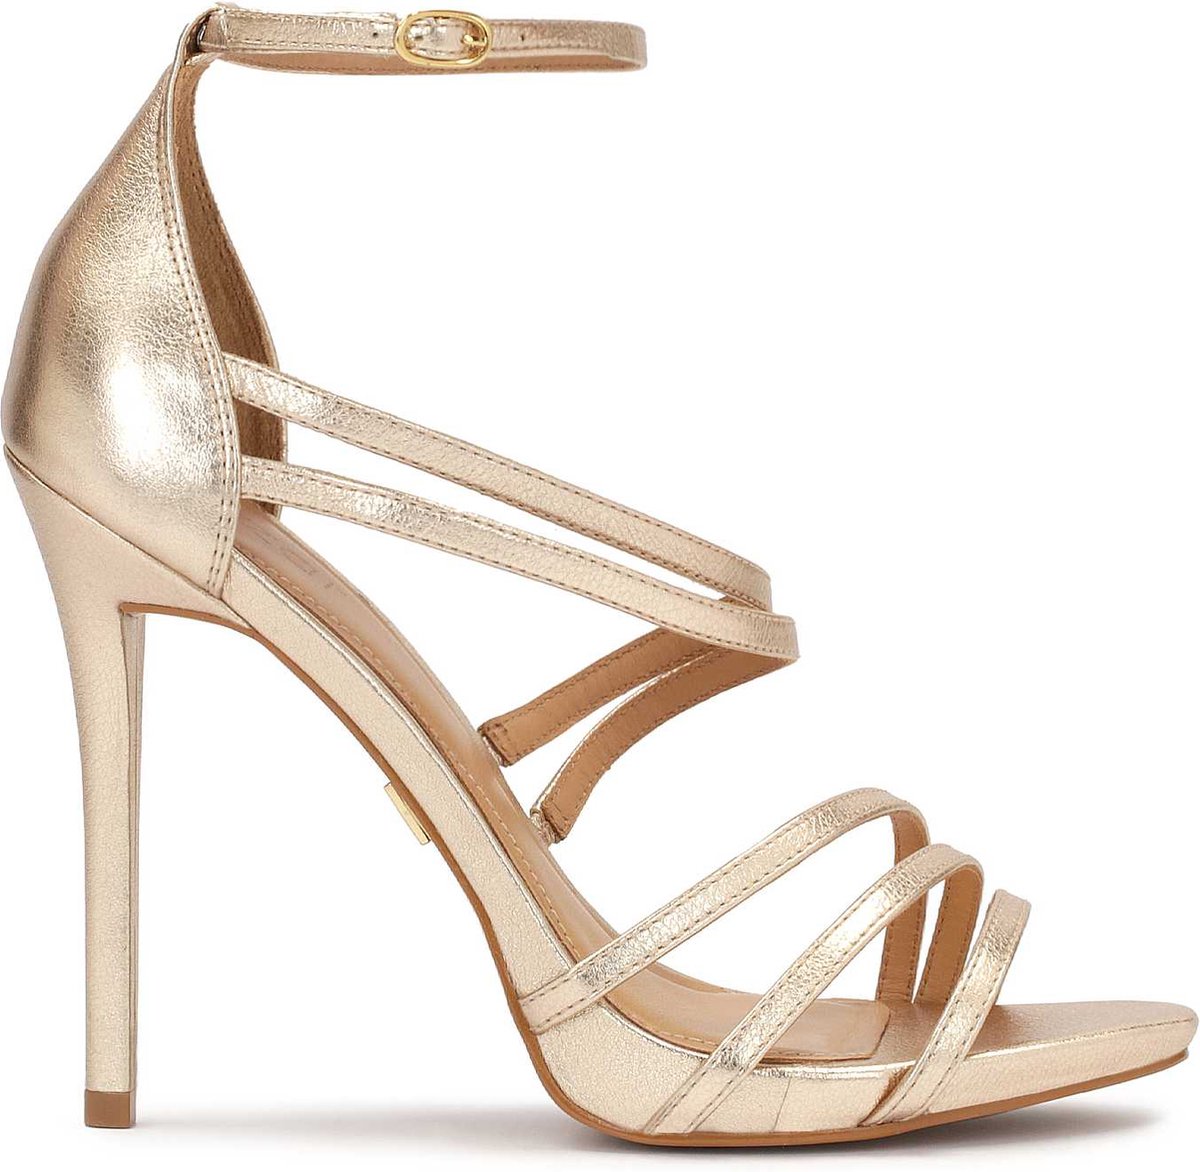 Kazar Golden sandals on a heel with diagonal straps